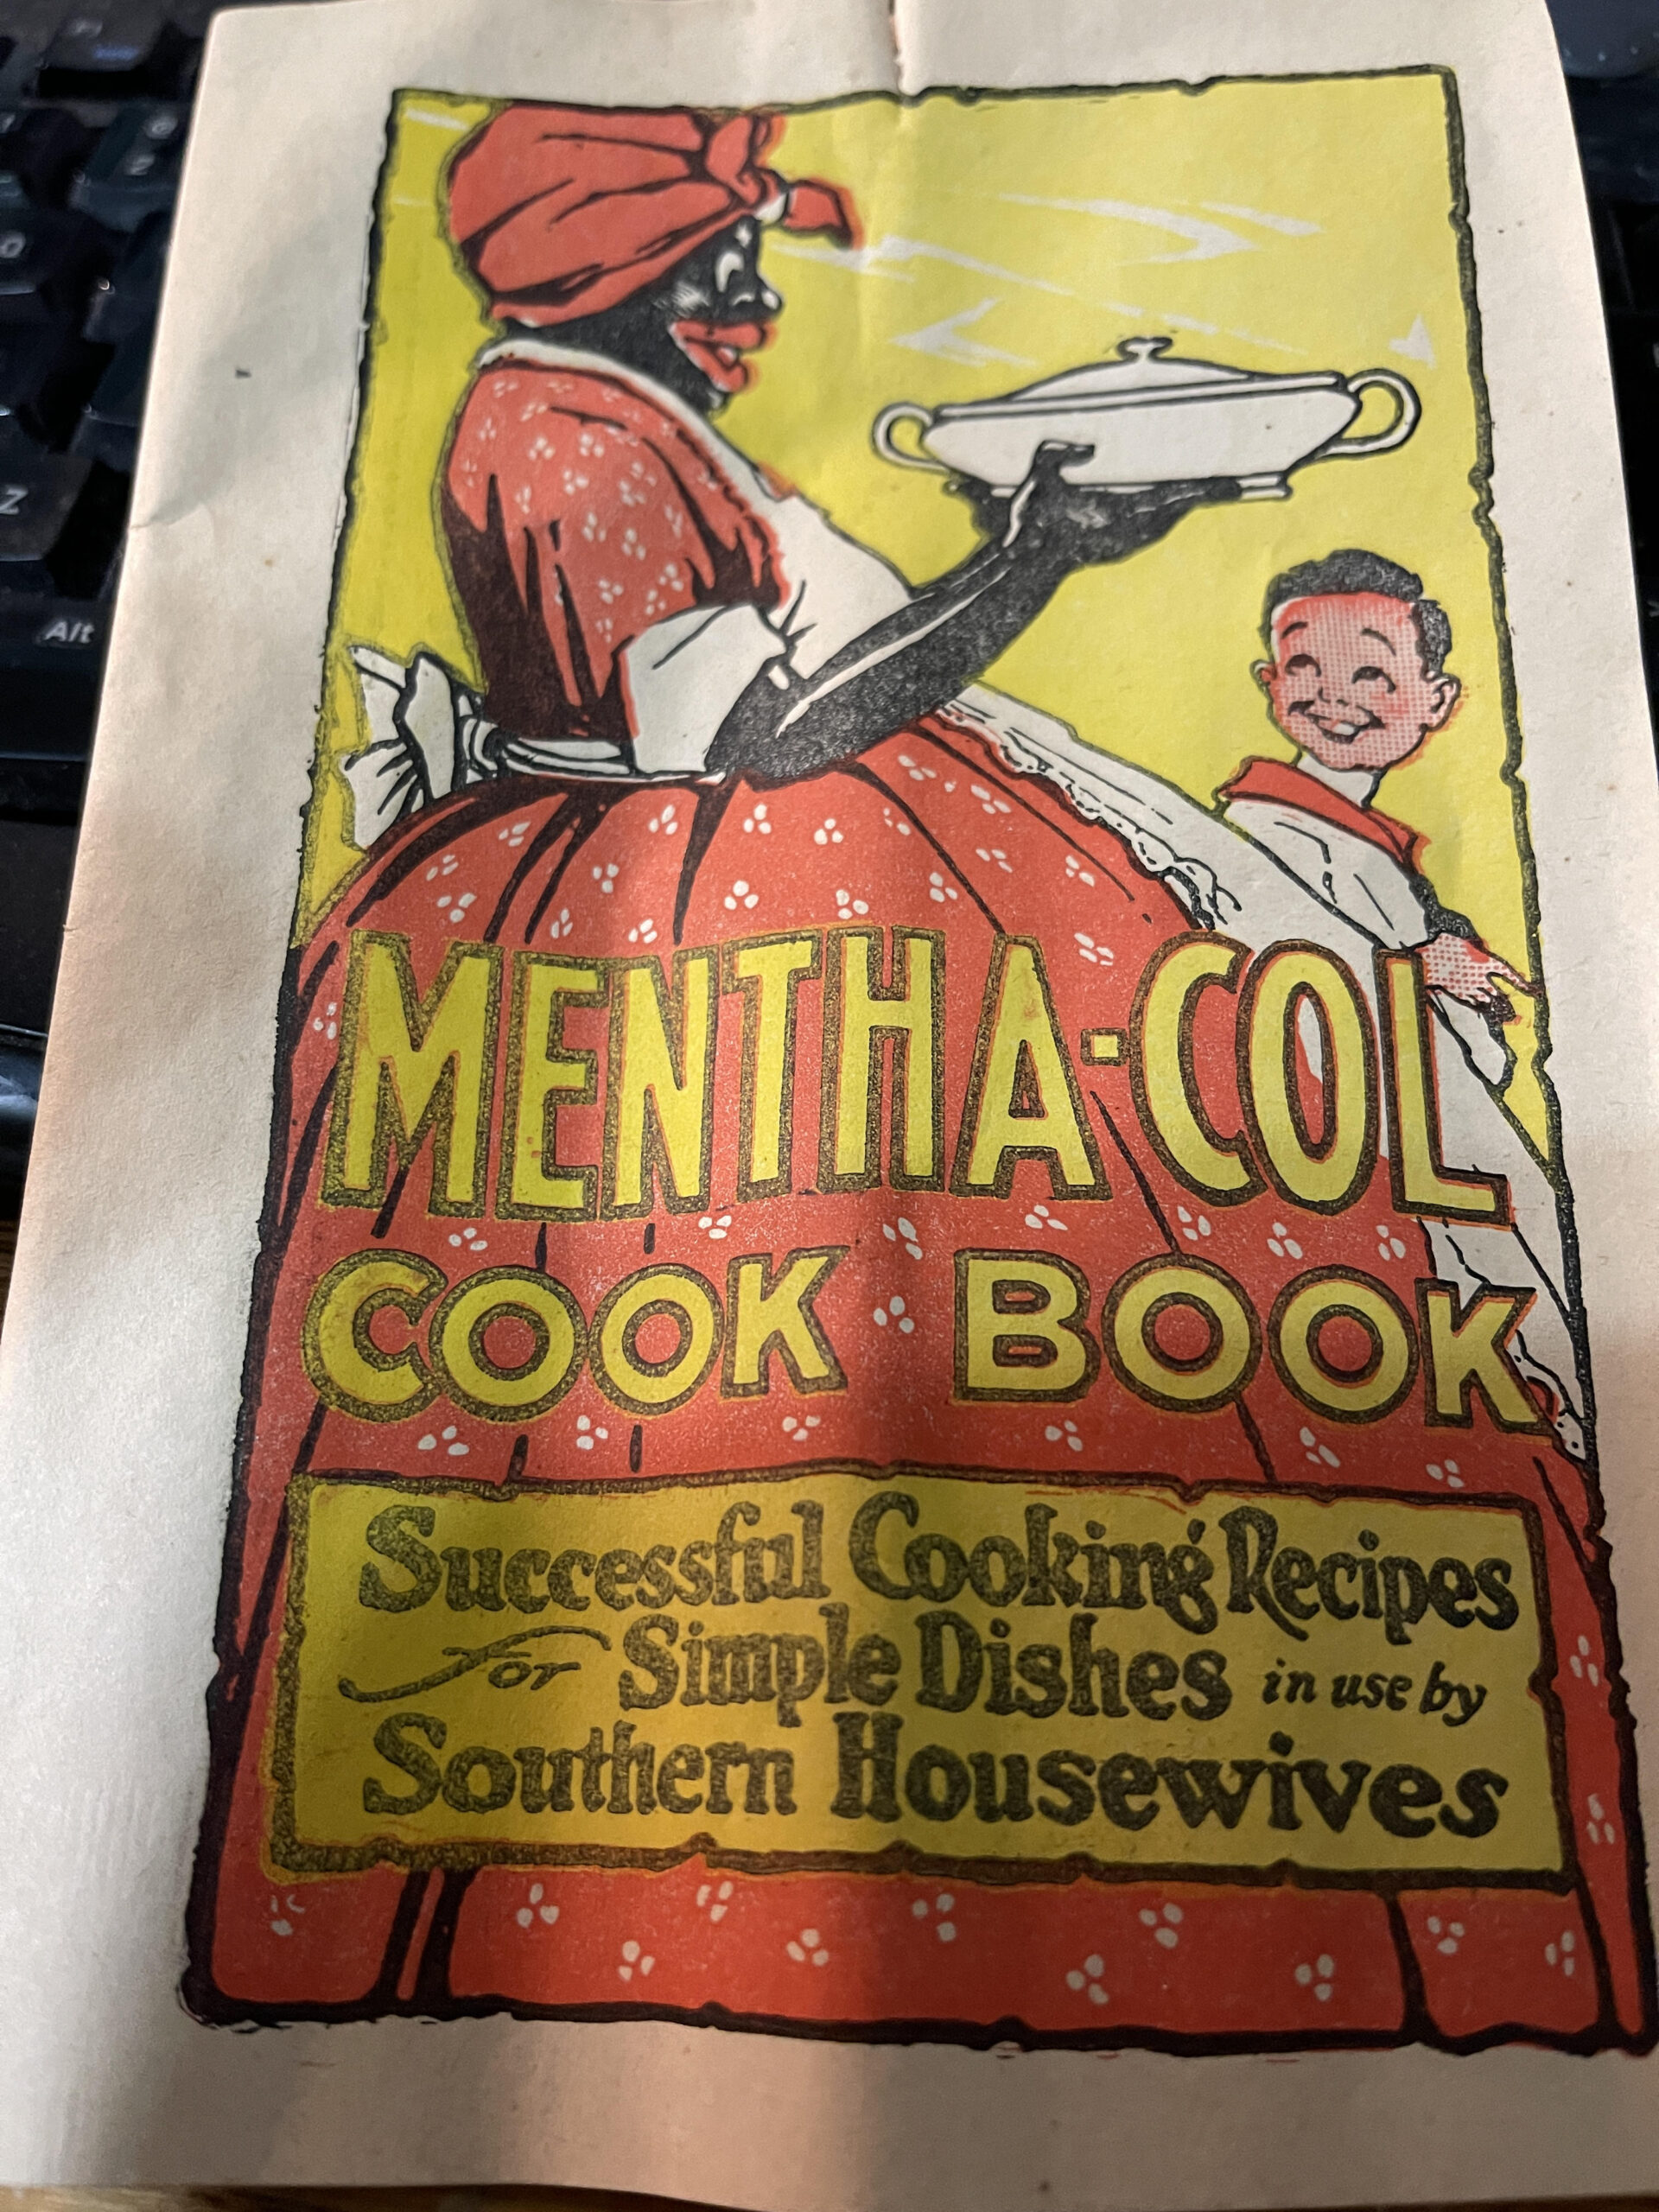 https://vintagecookbook.com/wp-content/uploads/2023/03/Mentha-col-cook-book-scaled.jpg